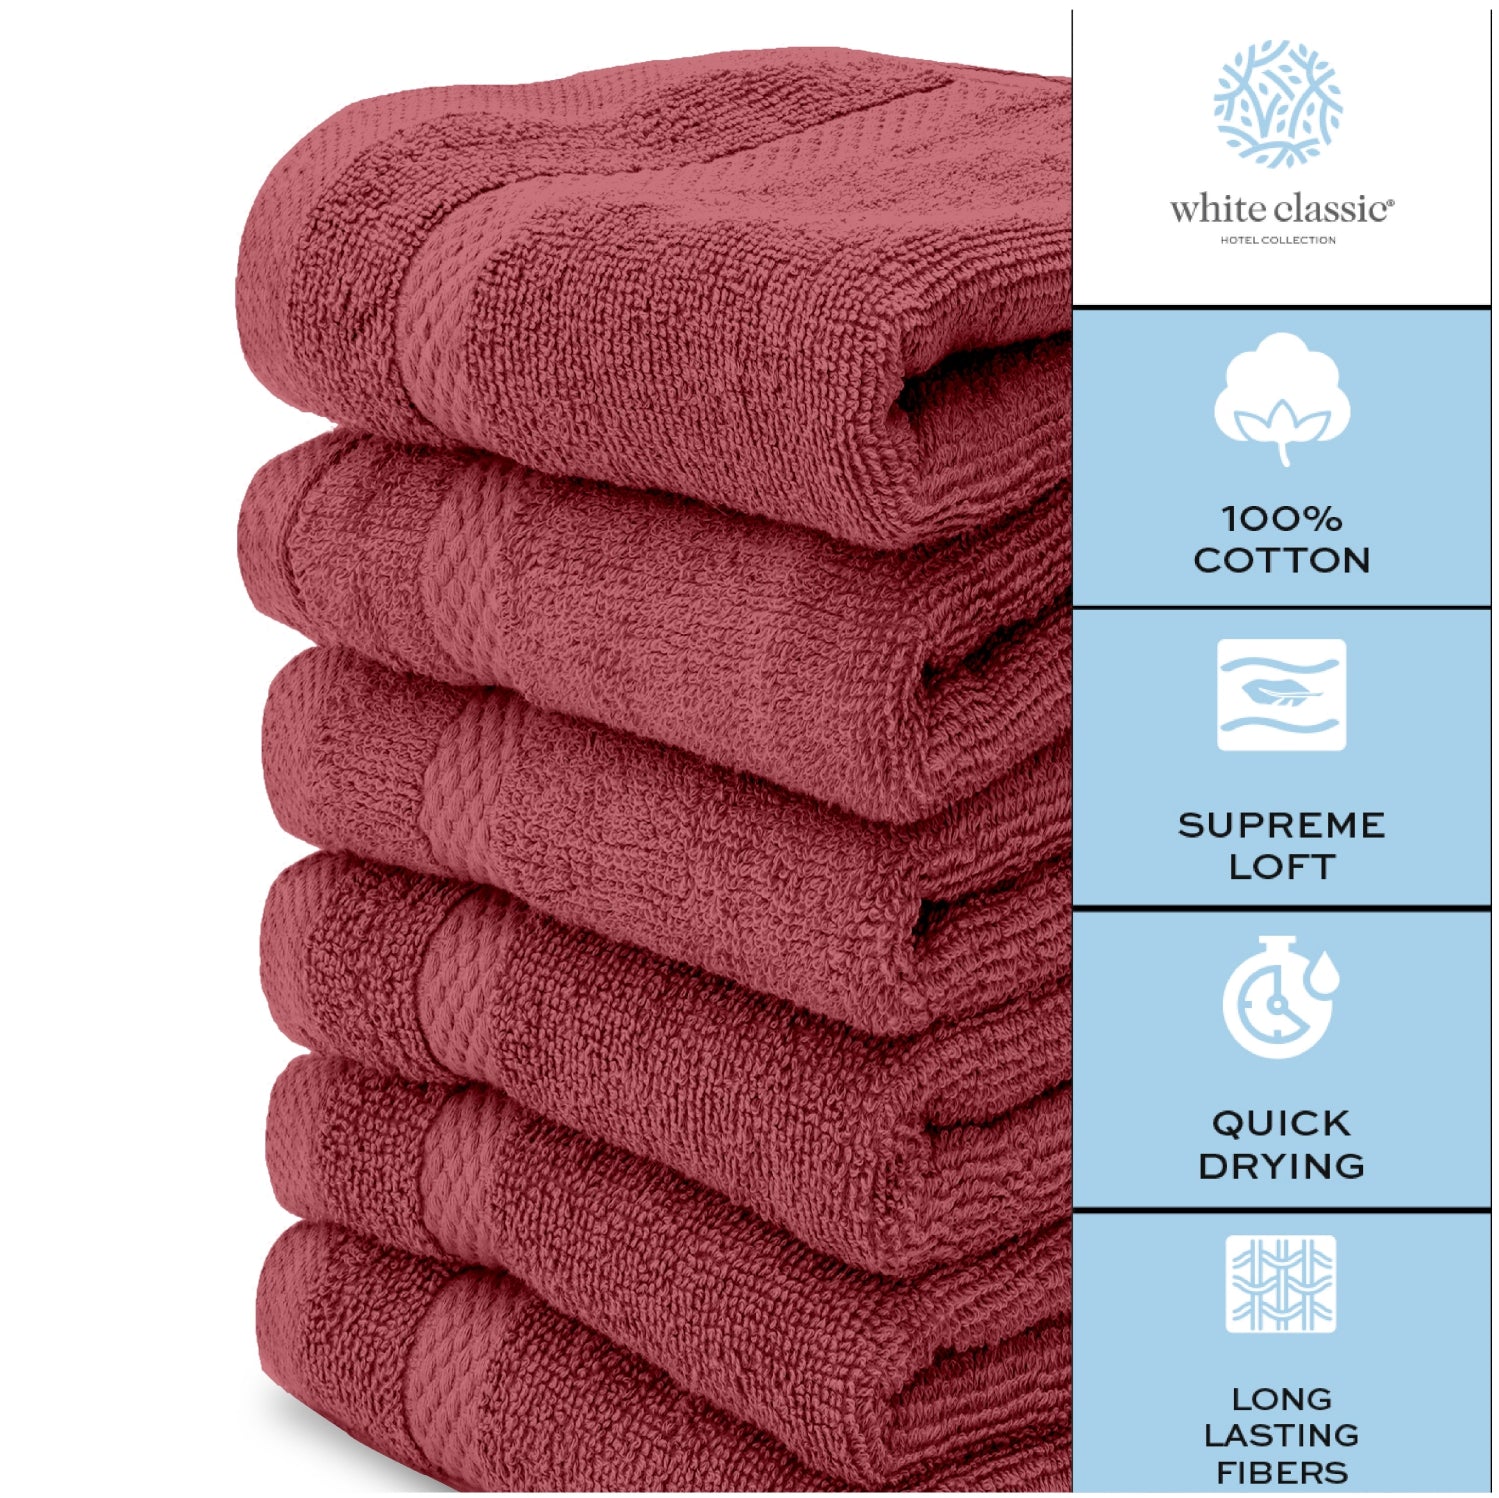 Hotel Towels 13×13 Wash Cloth White